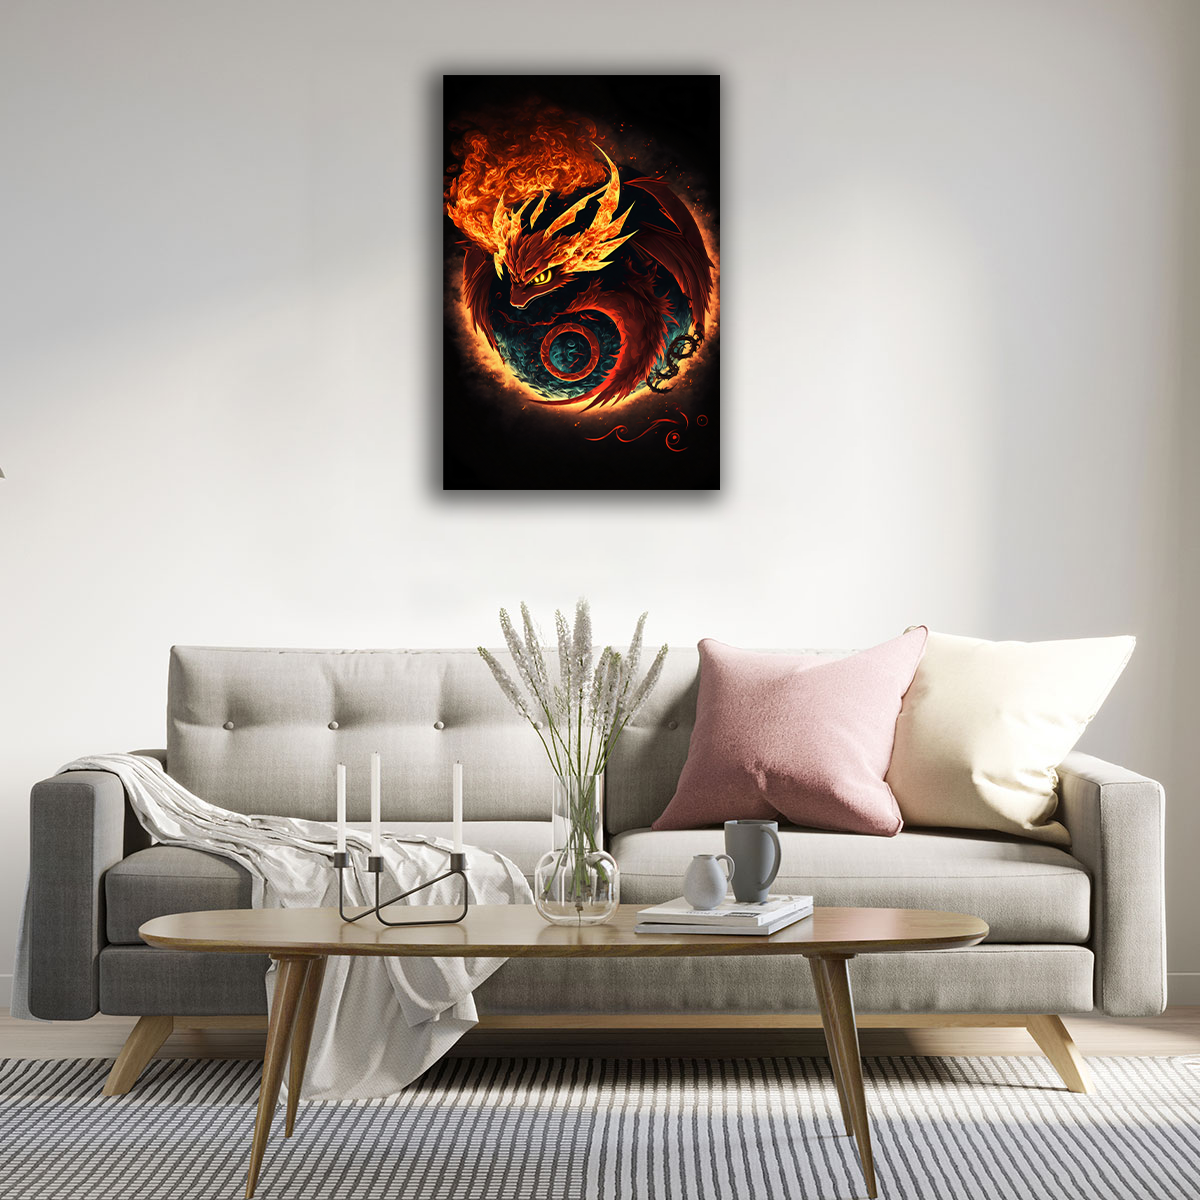 Fire Type Evolution Canvas Print - WallLumi Canvases